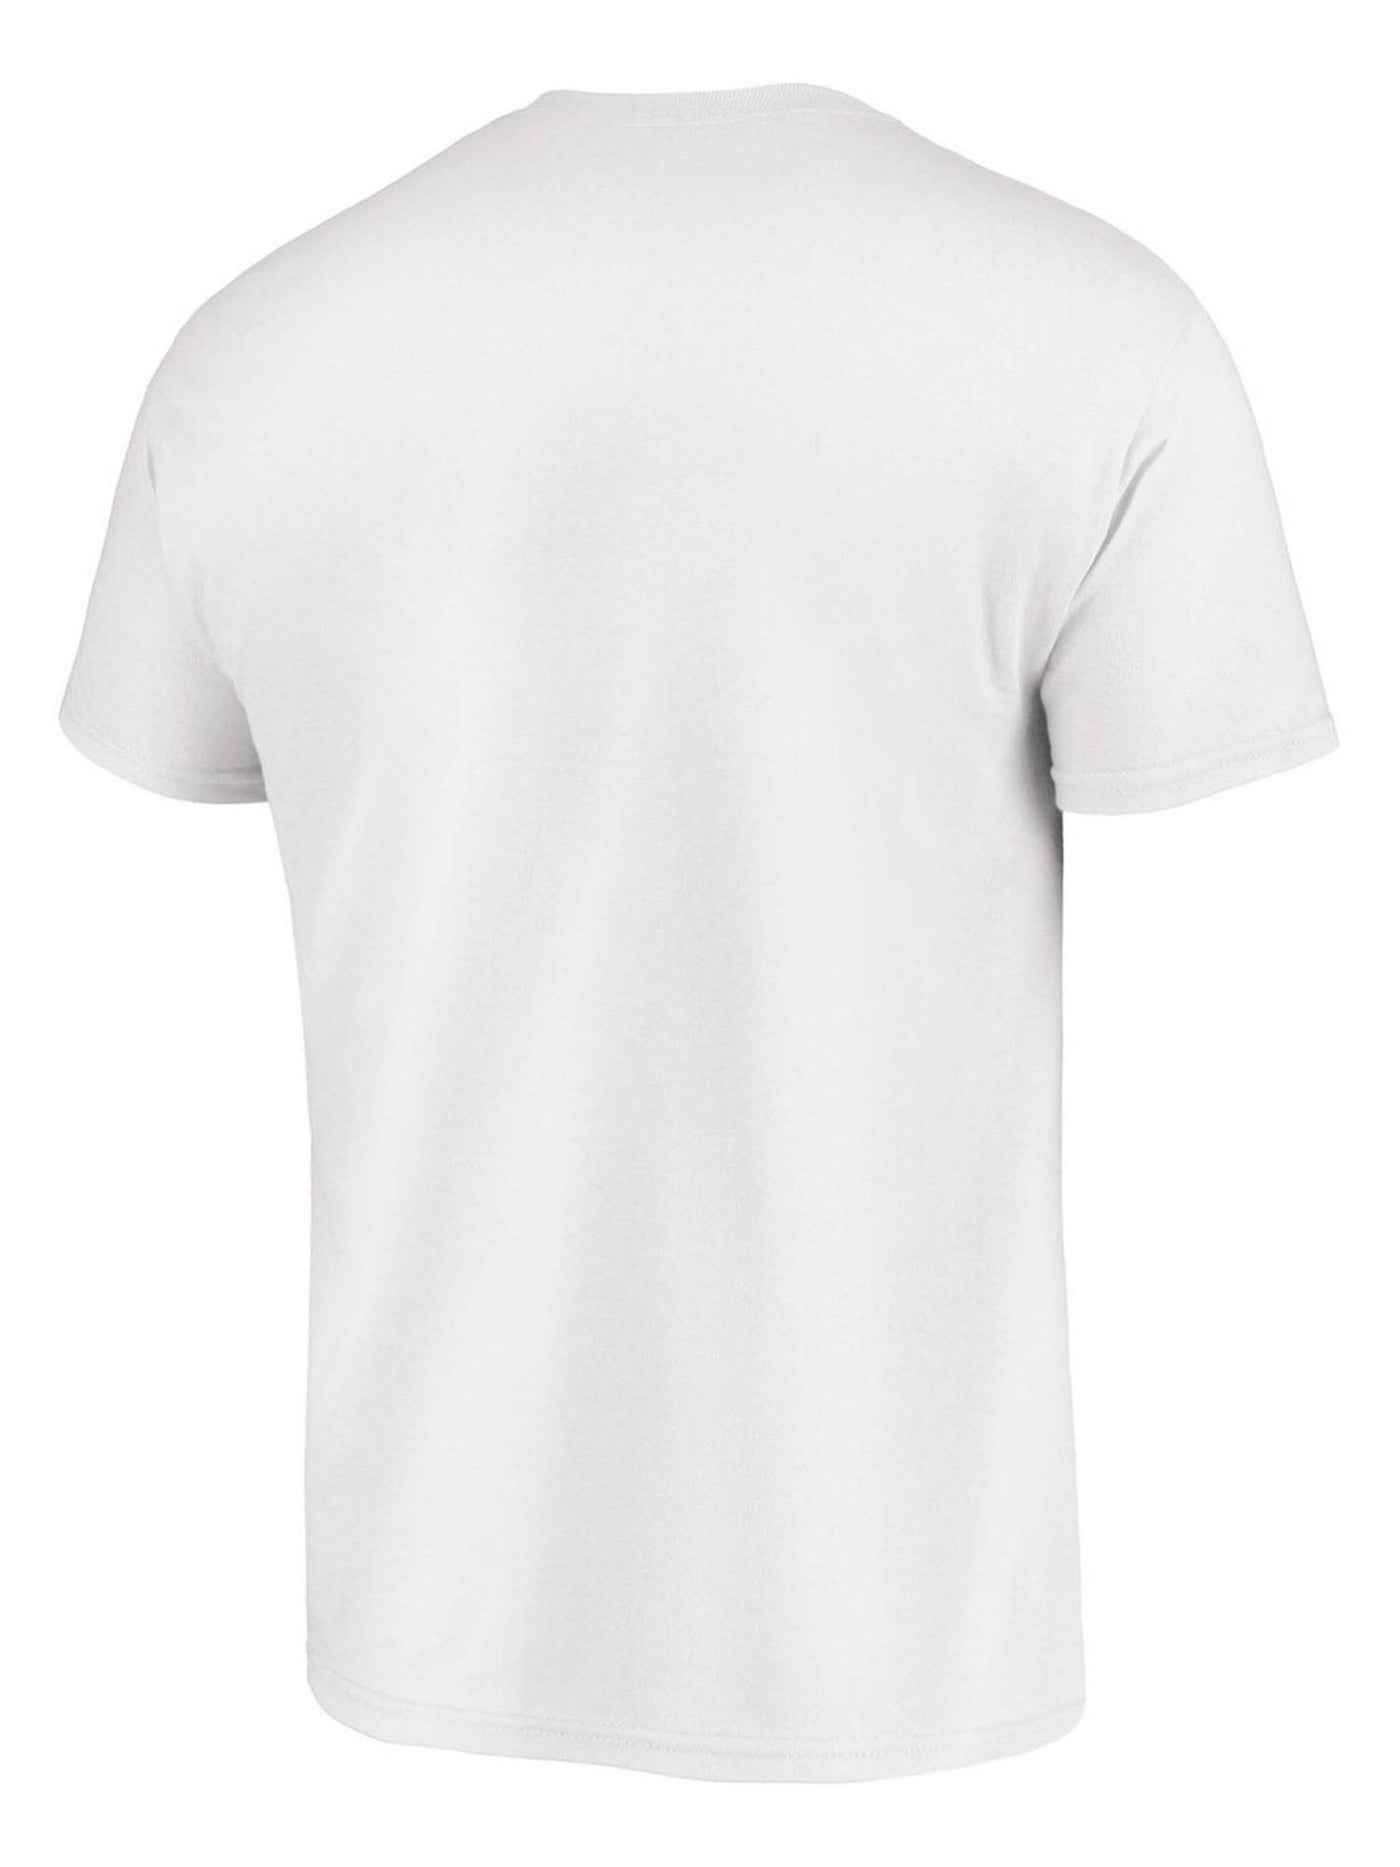 HYBRID APPAREL Mens College White Graphic Short Sleeve T-Shirt XL